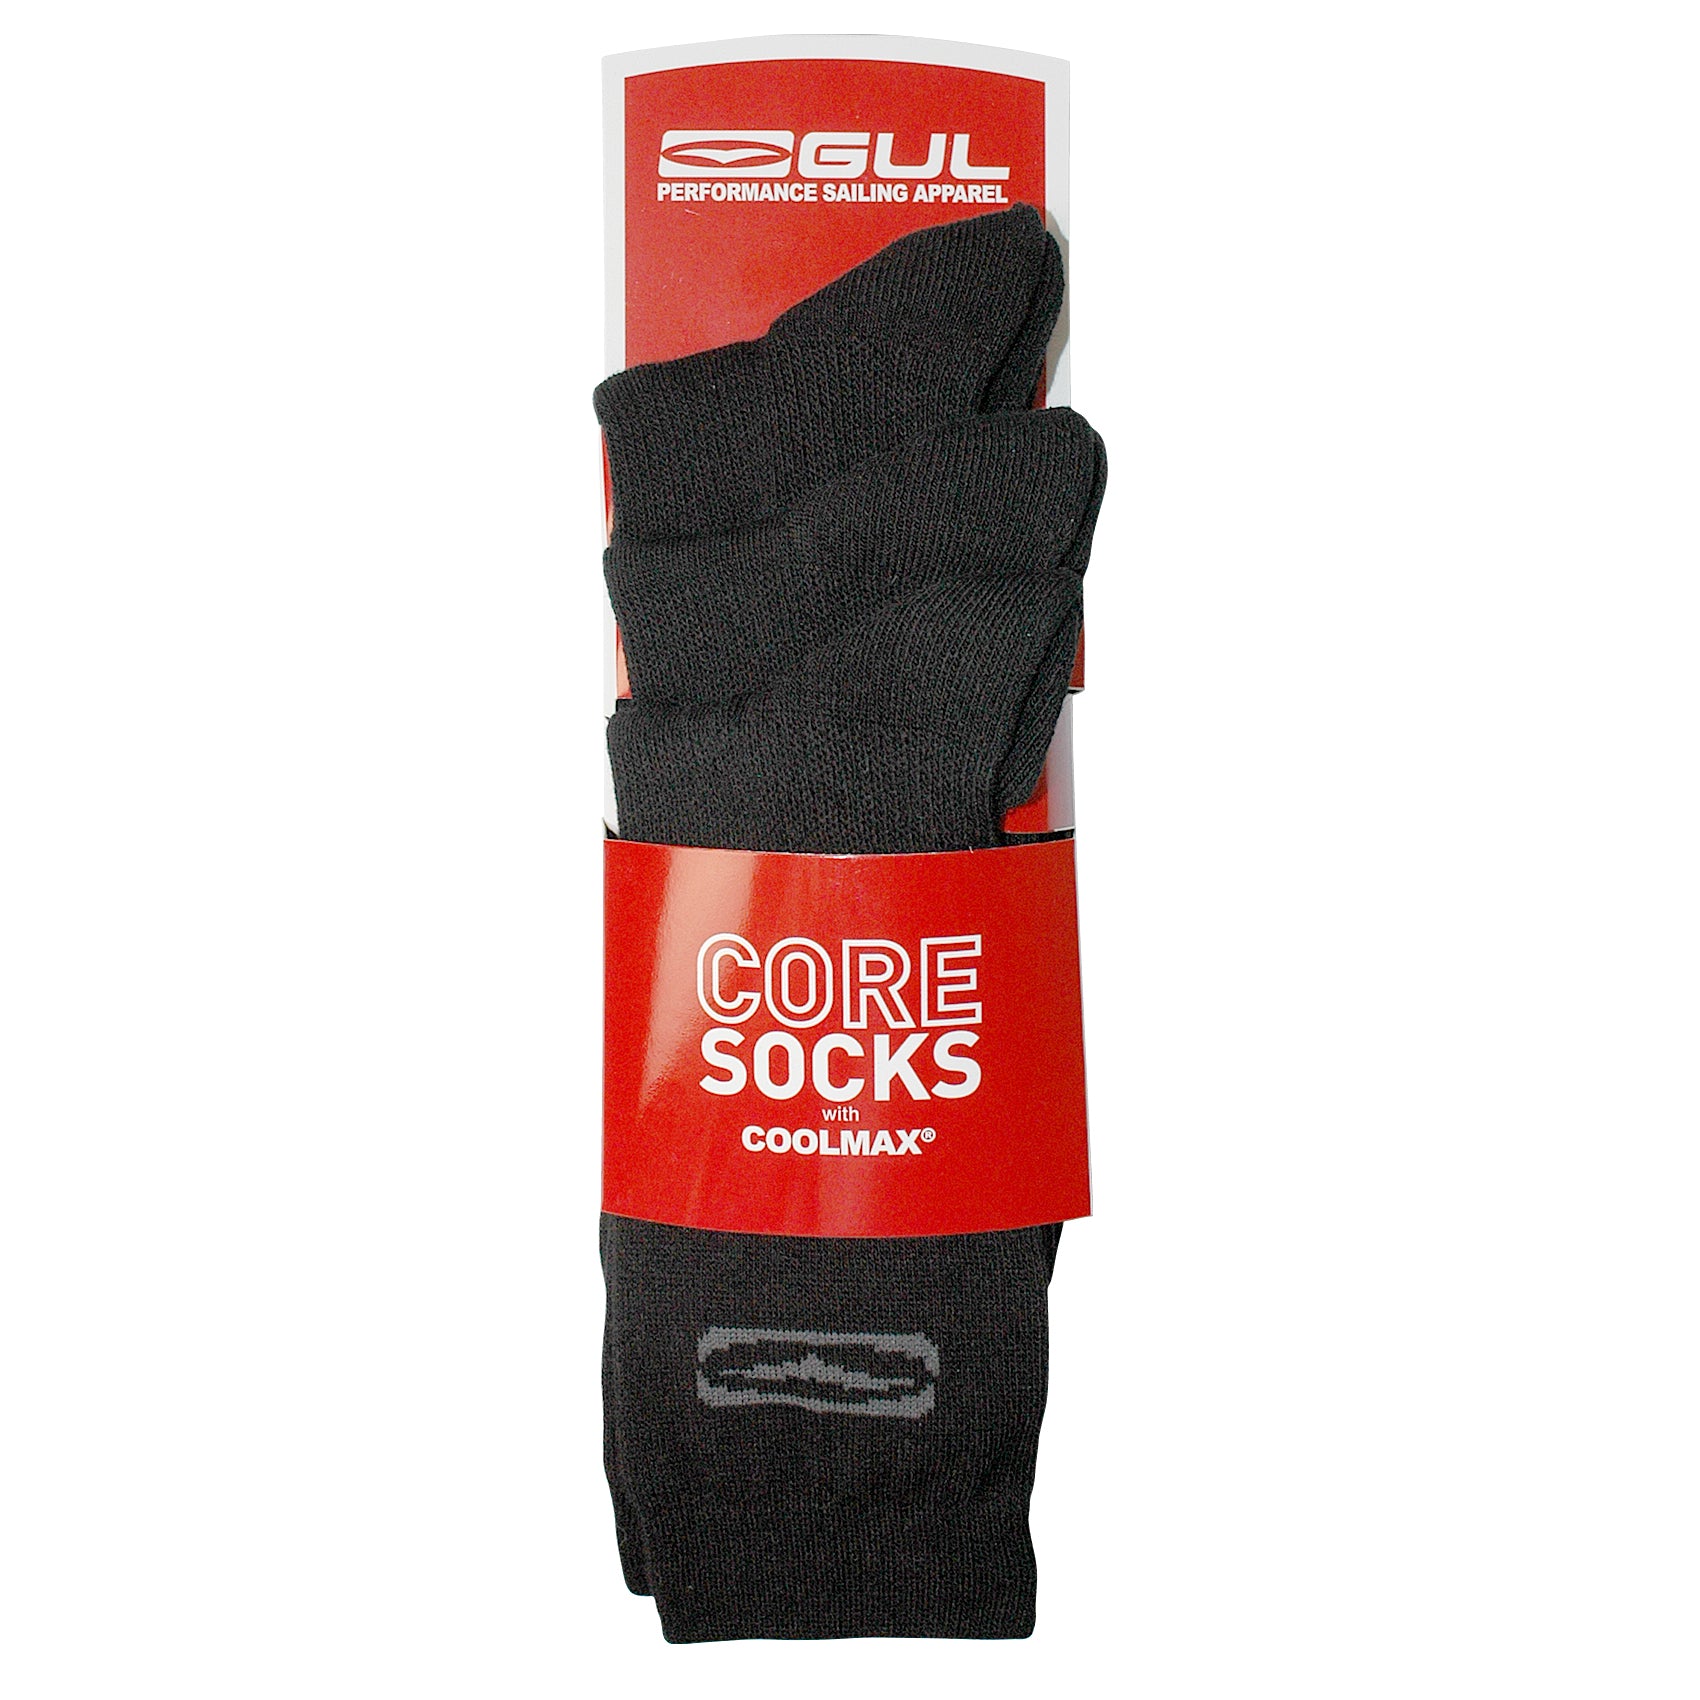 Gul Core Sports socks with Coolmax